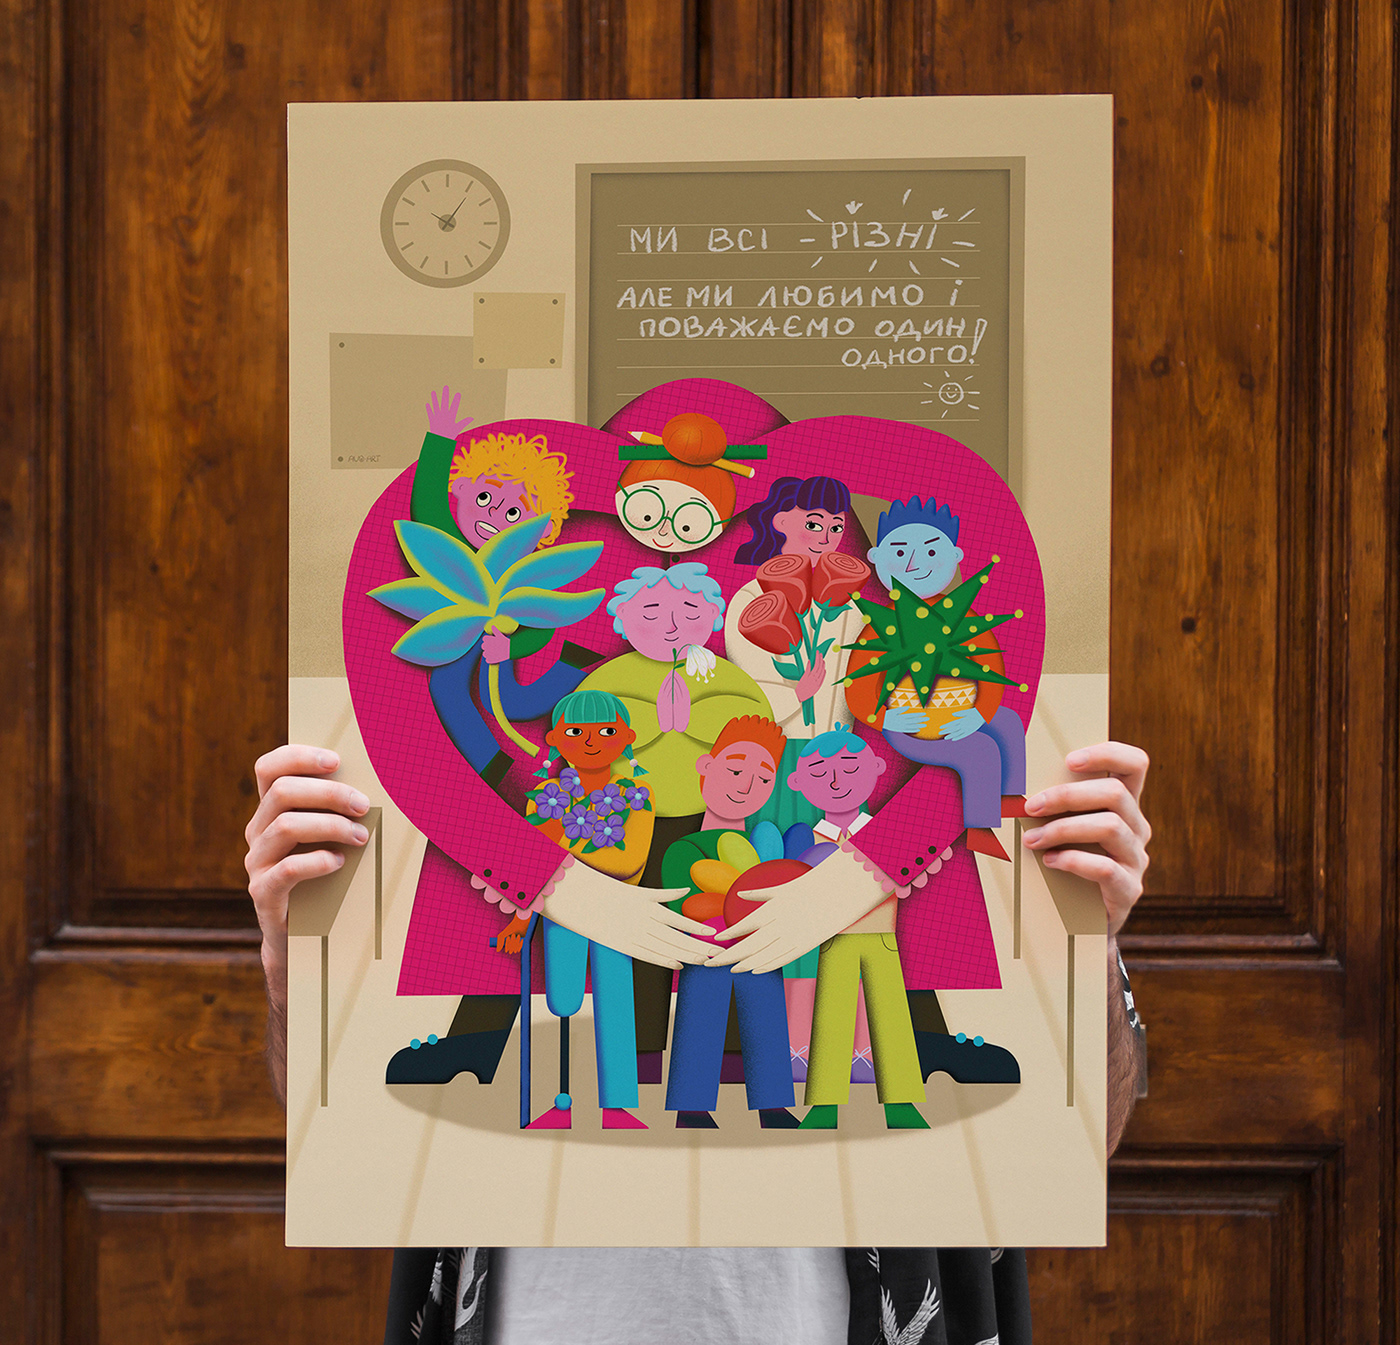 school children children illustration children book social campaign Poster Design equality Human rights Flowers Antibullying